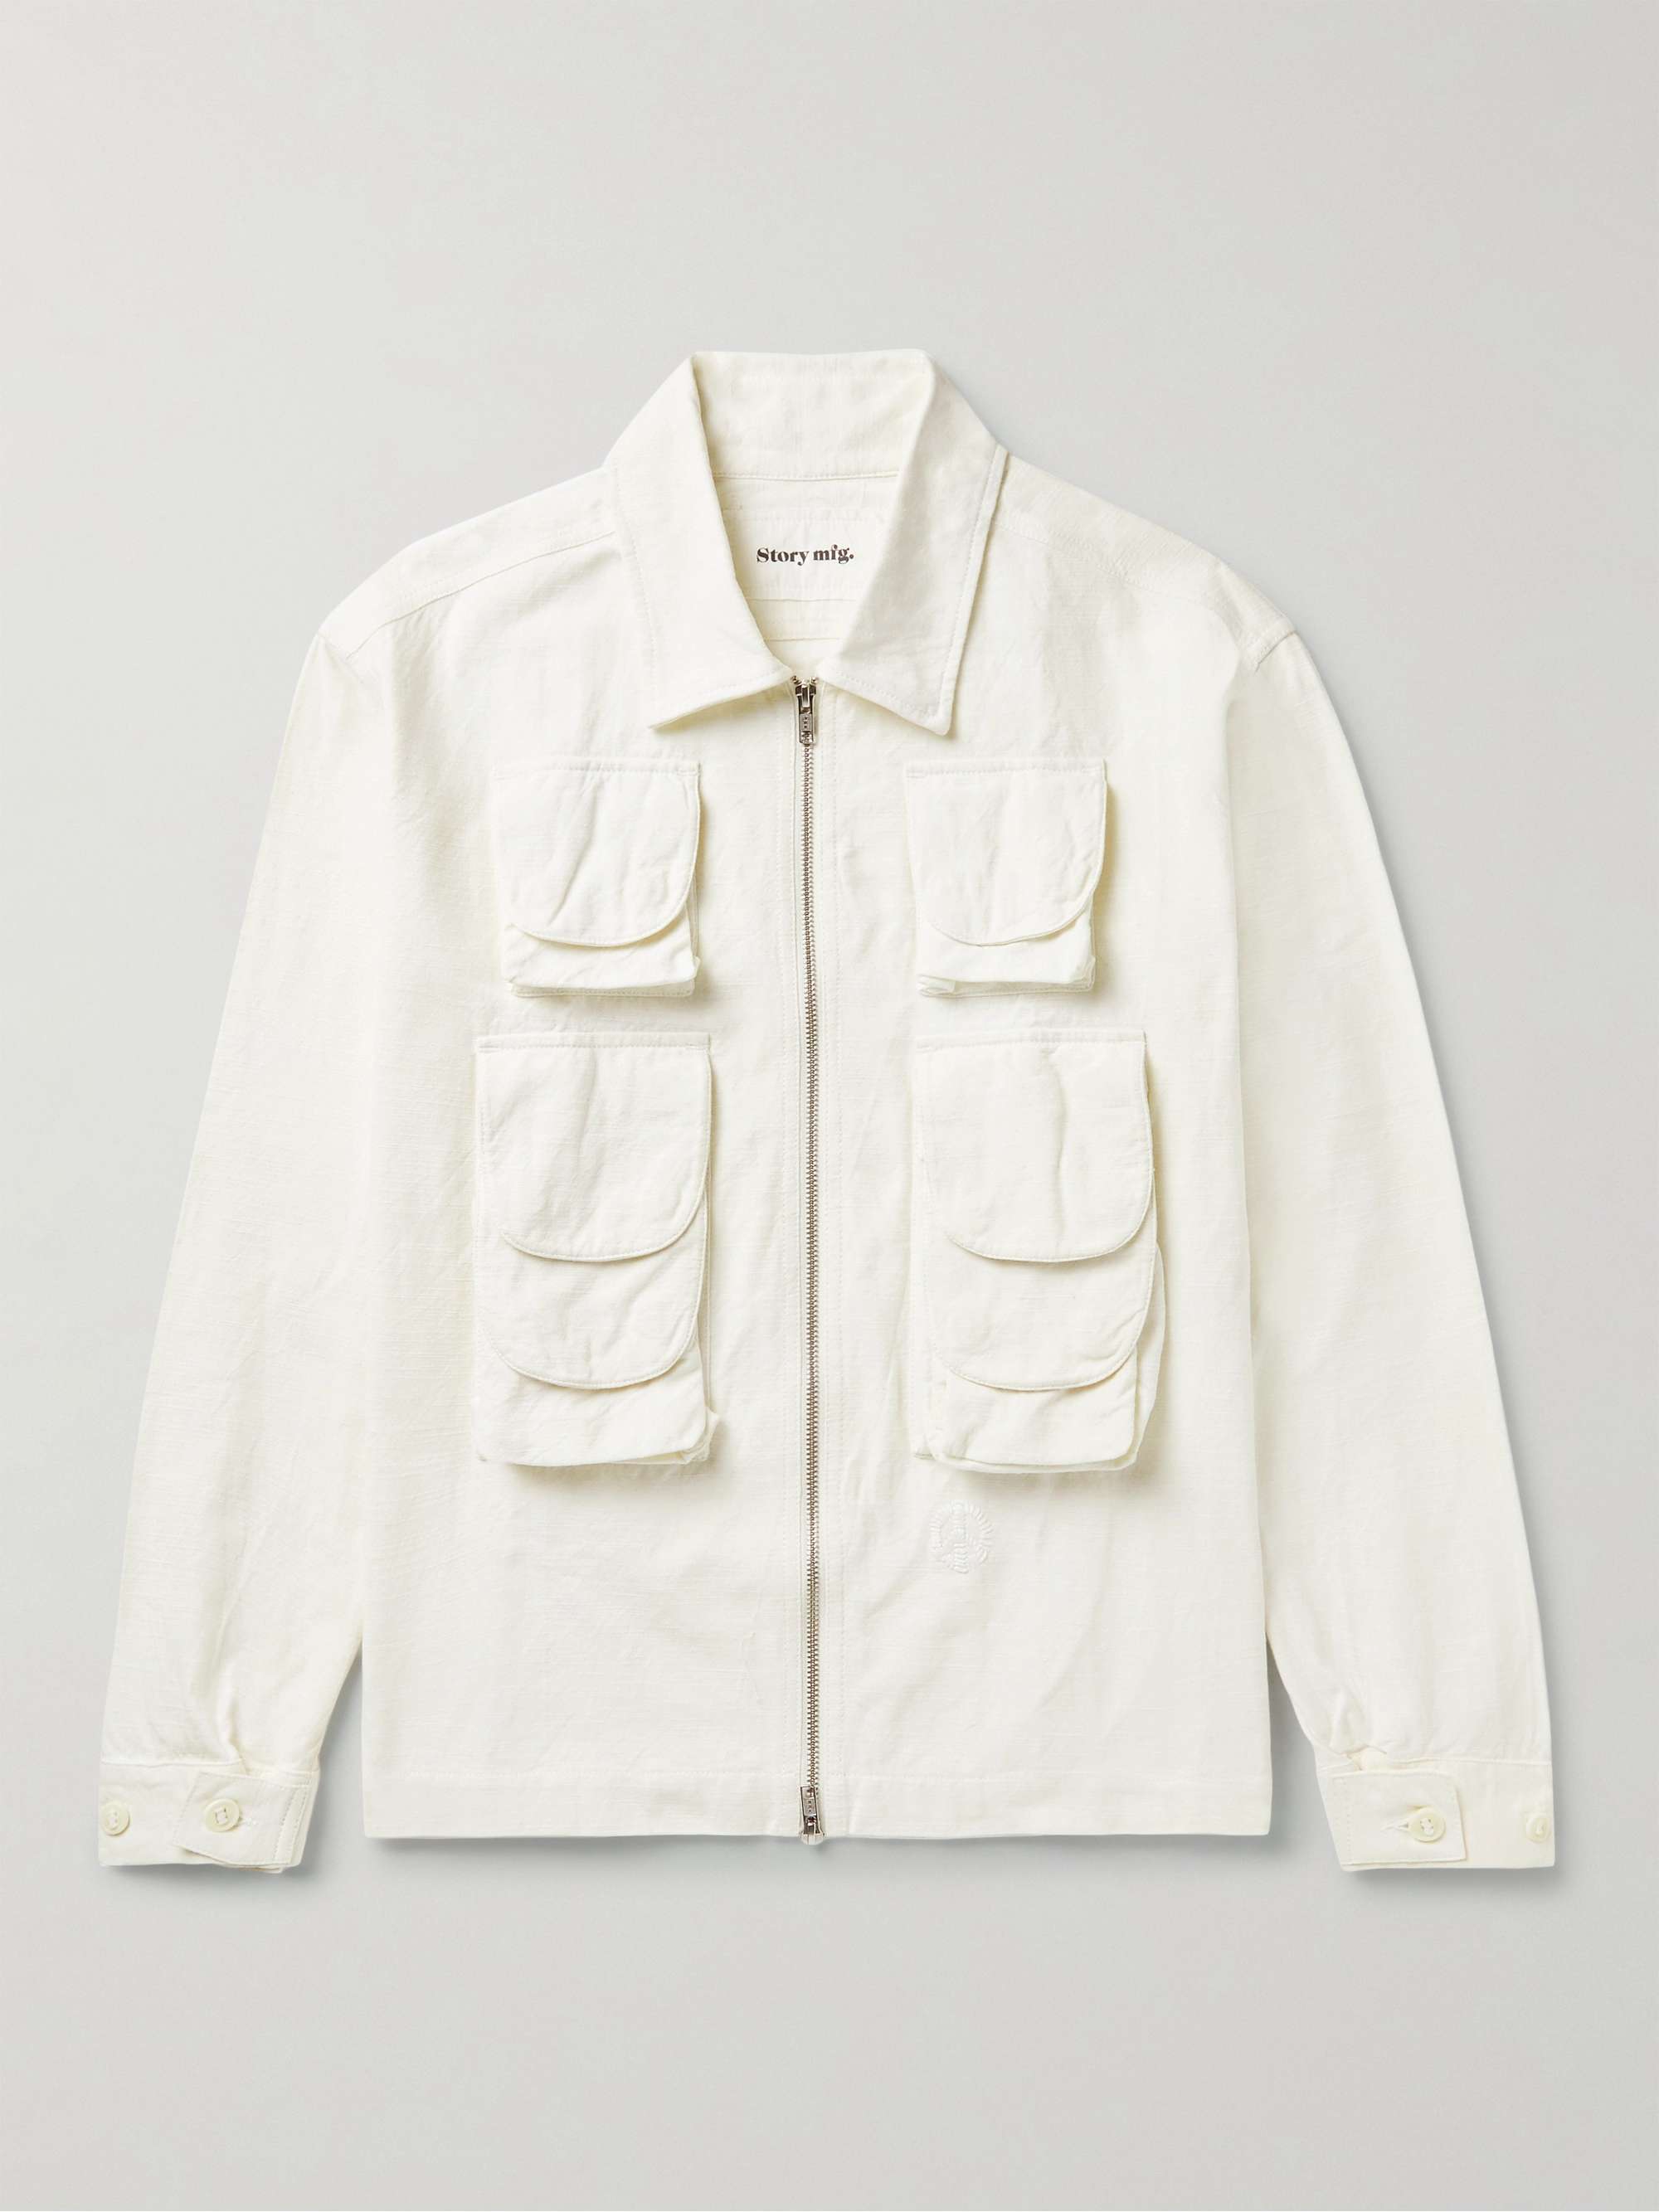 STORY MFG. Algebra Embroidered Slub Organic Cotton Shirt Jacket